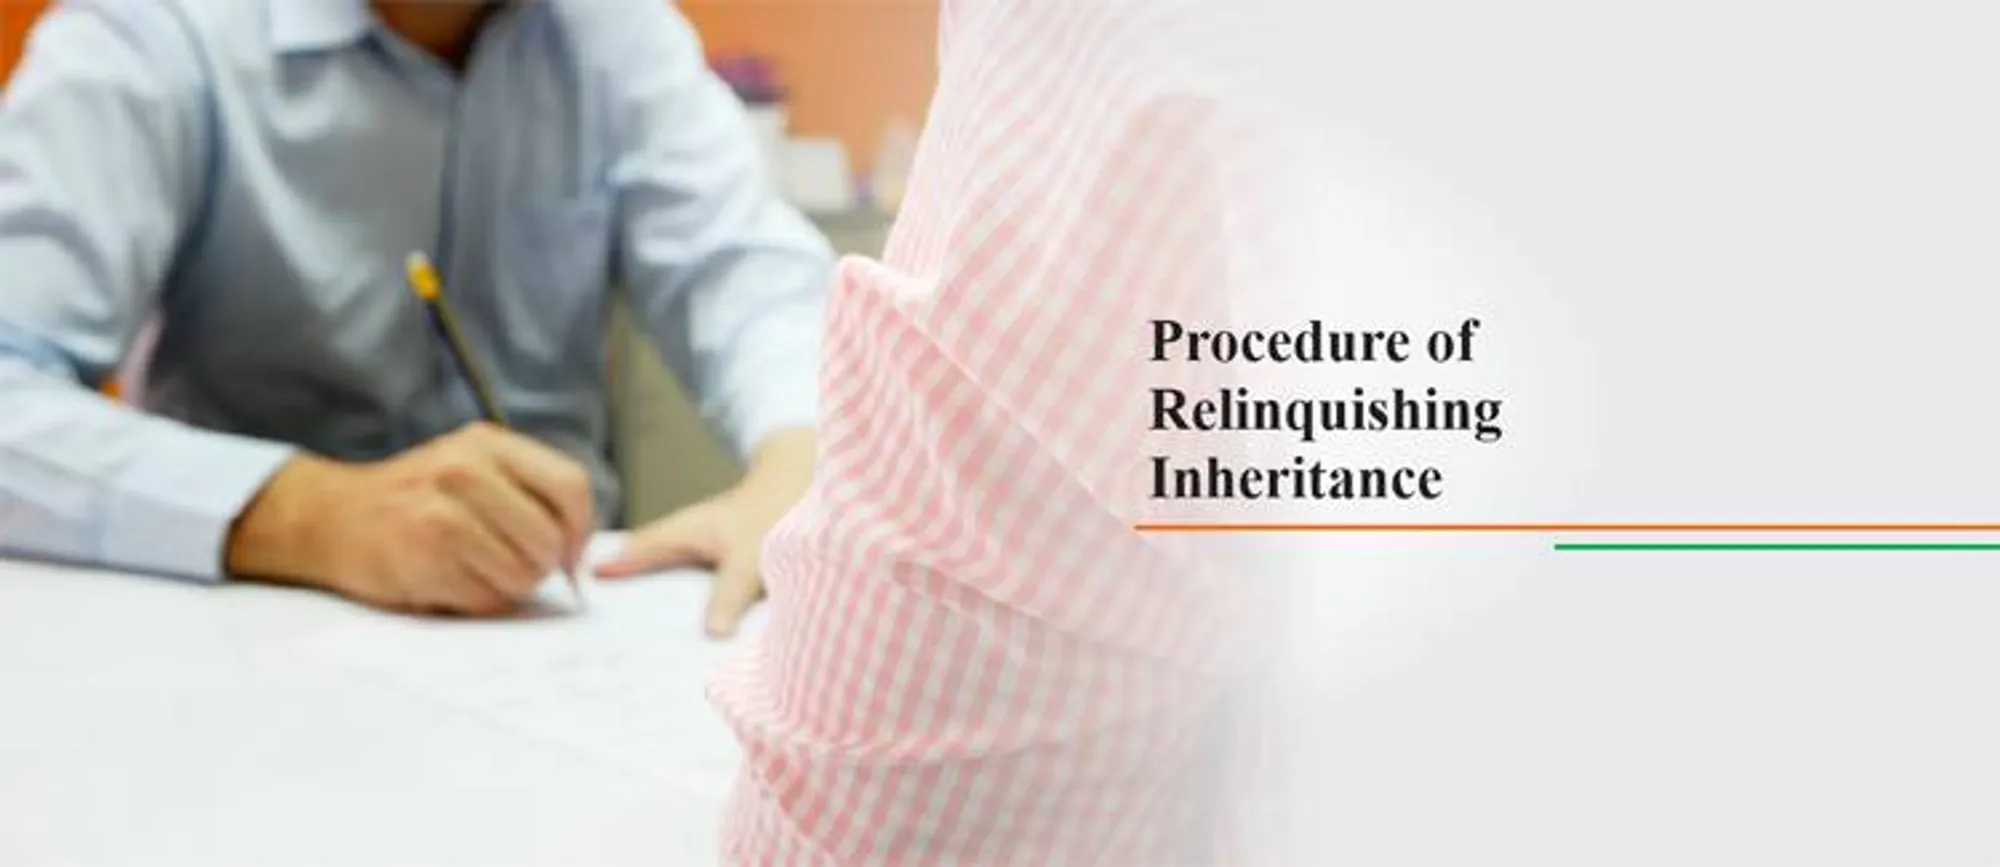 Procedure of Relinquishing Inheritance